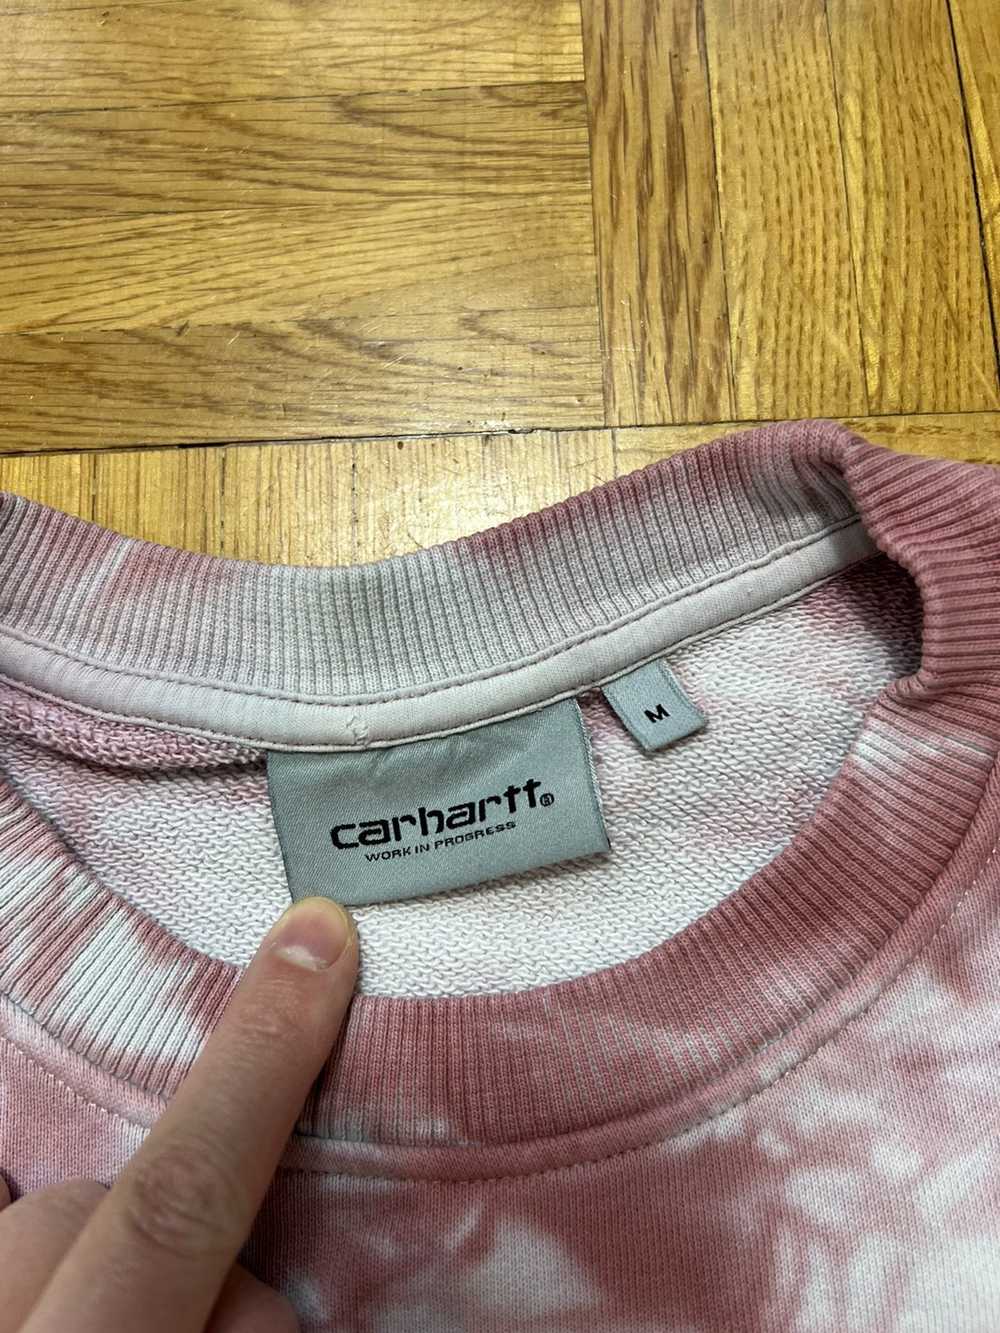 Carhartt Sweatshirt Carhartt great pattern logo - image 7